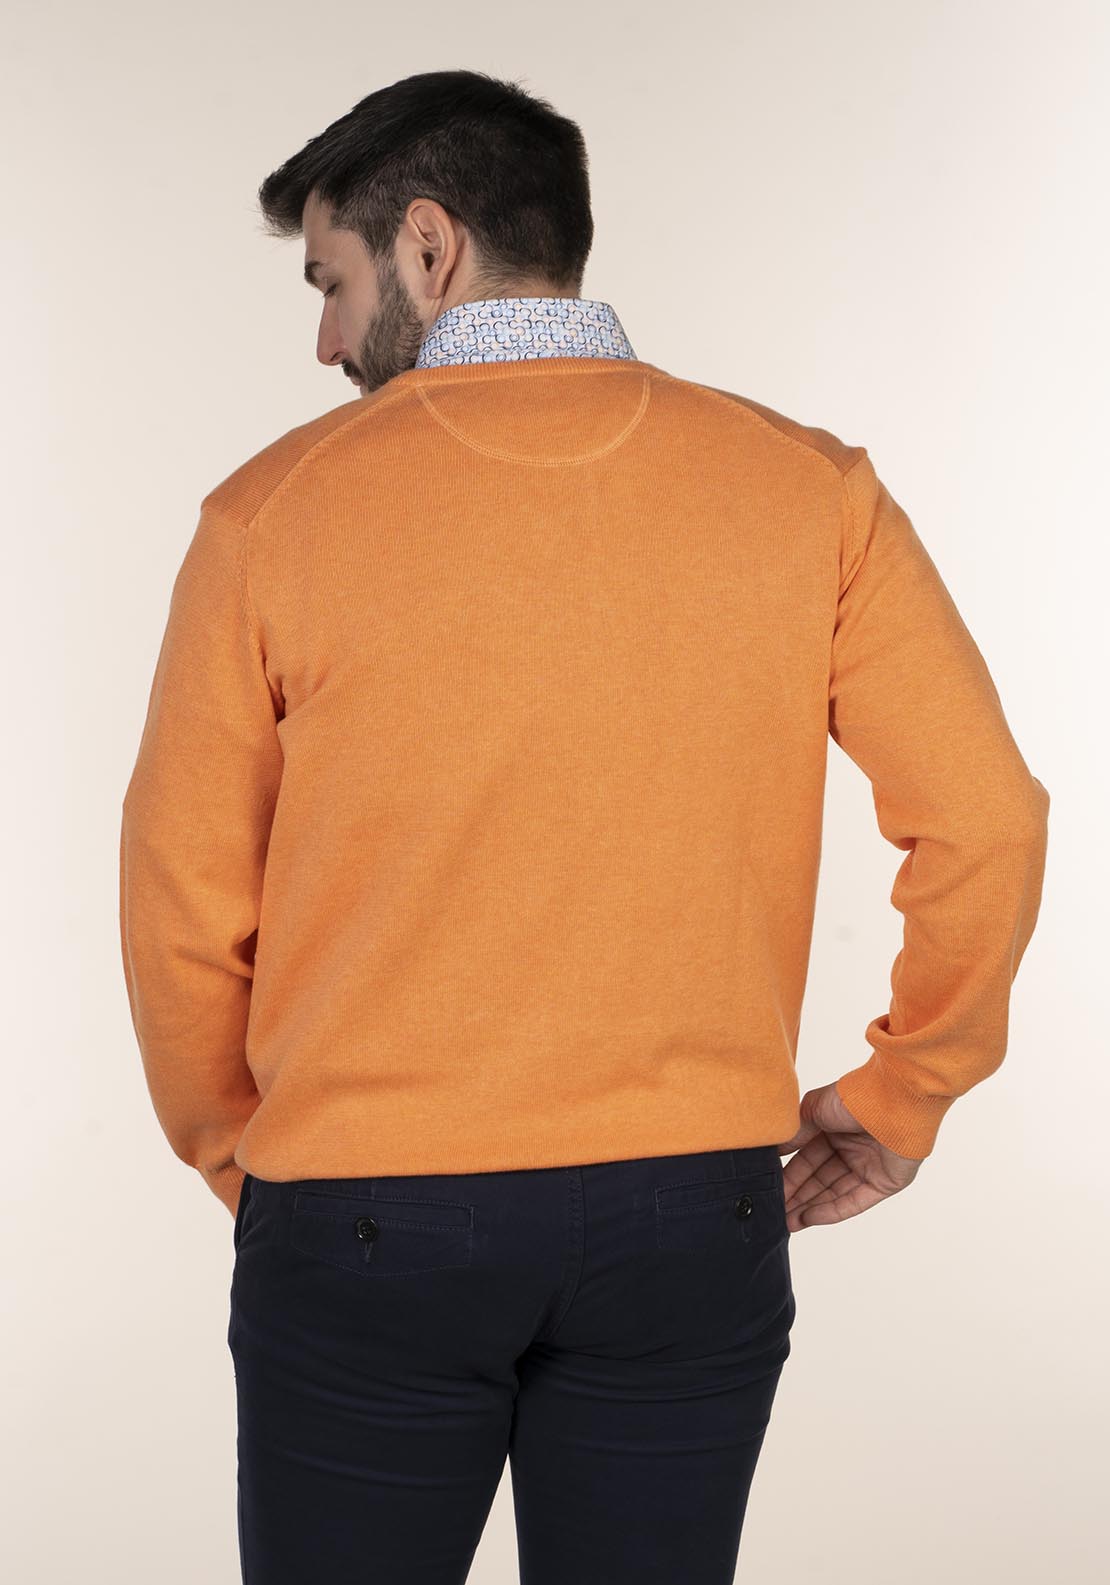 Yeats Plain Cotton V Neck Sweaters Orange 4 Shaws Department Stores